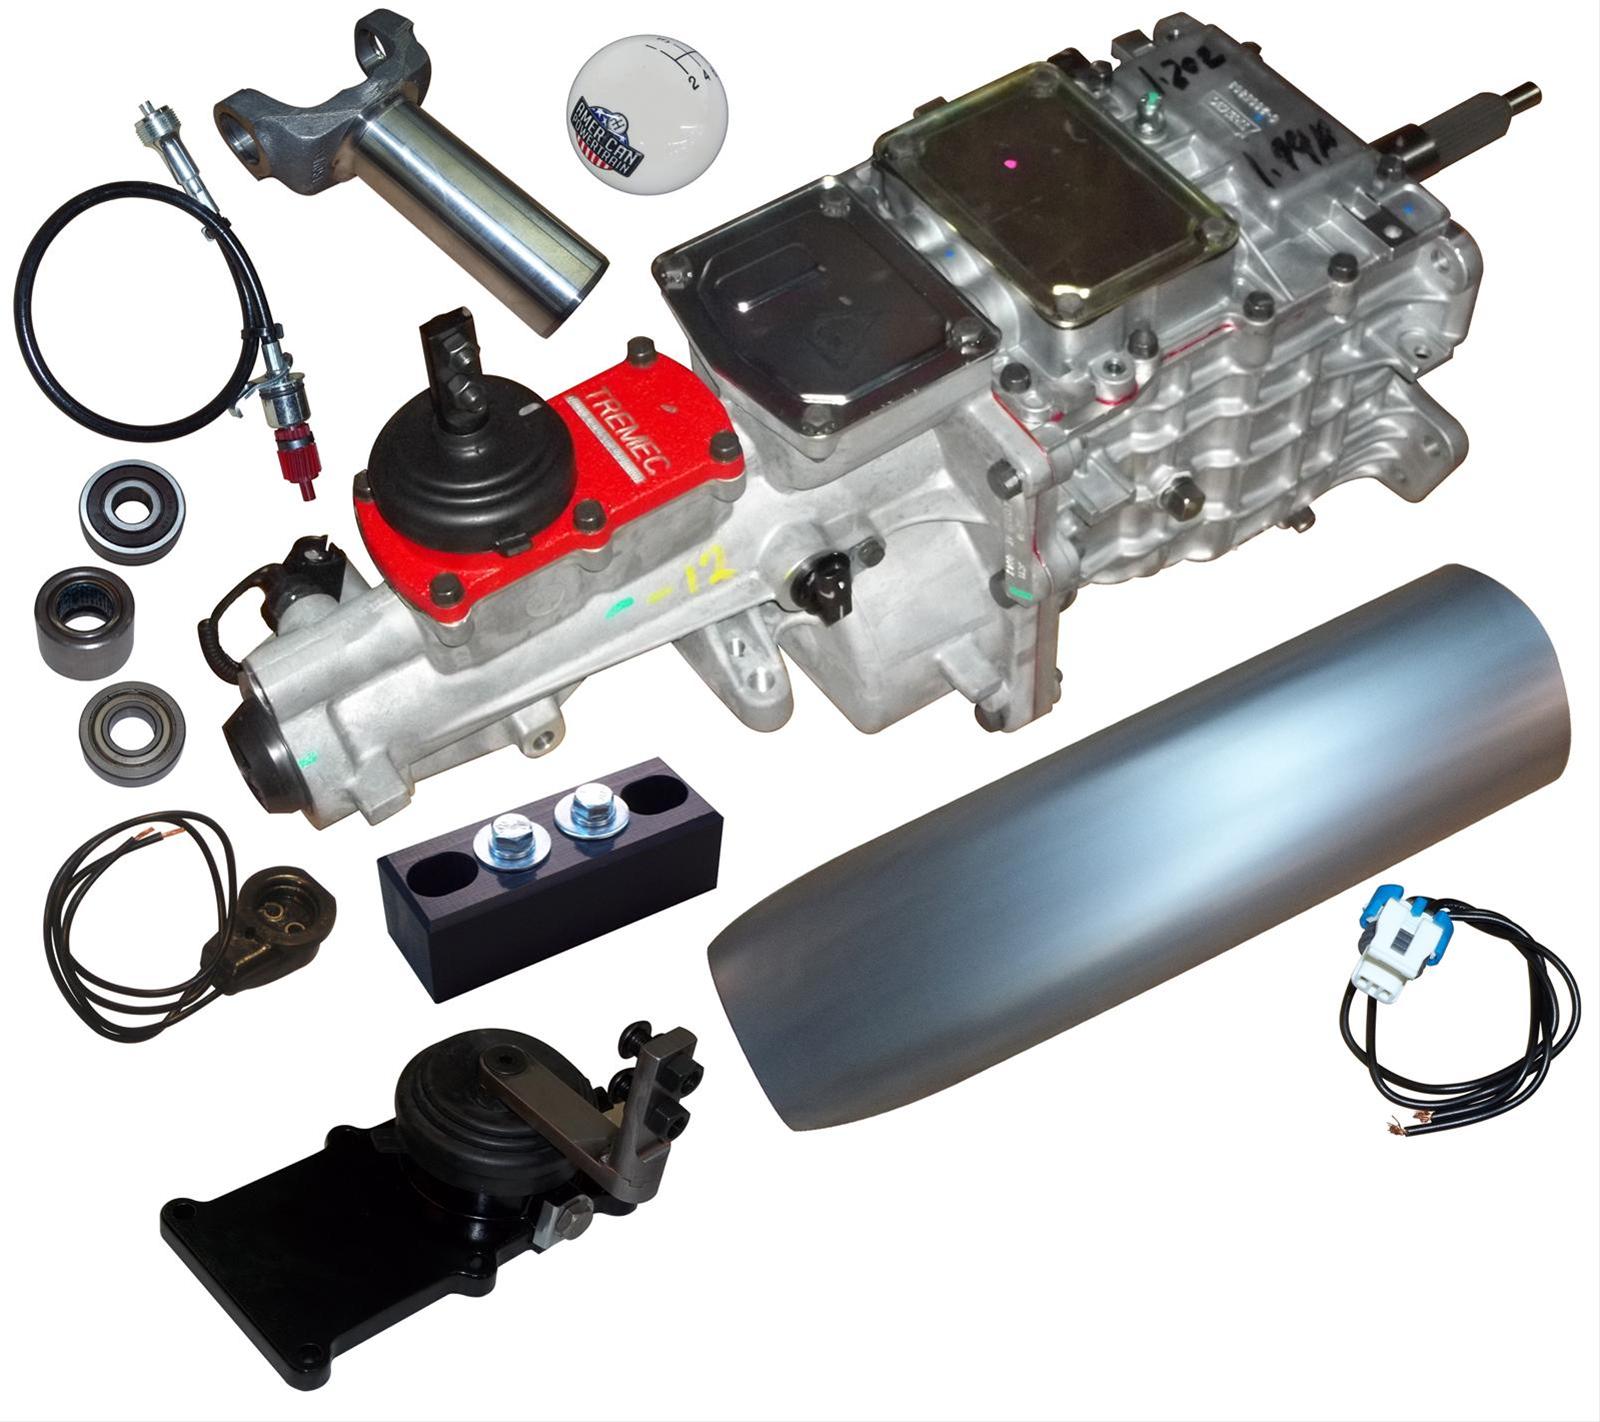 Фиат 600.трансмиссия. [F5] 5-Speed manual Trans. Gmt800 Powertrain. RLS transmission Kits.